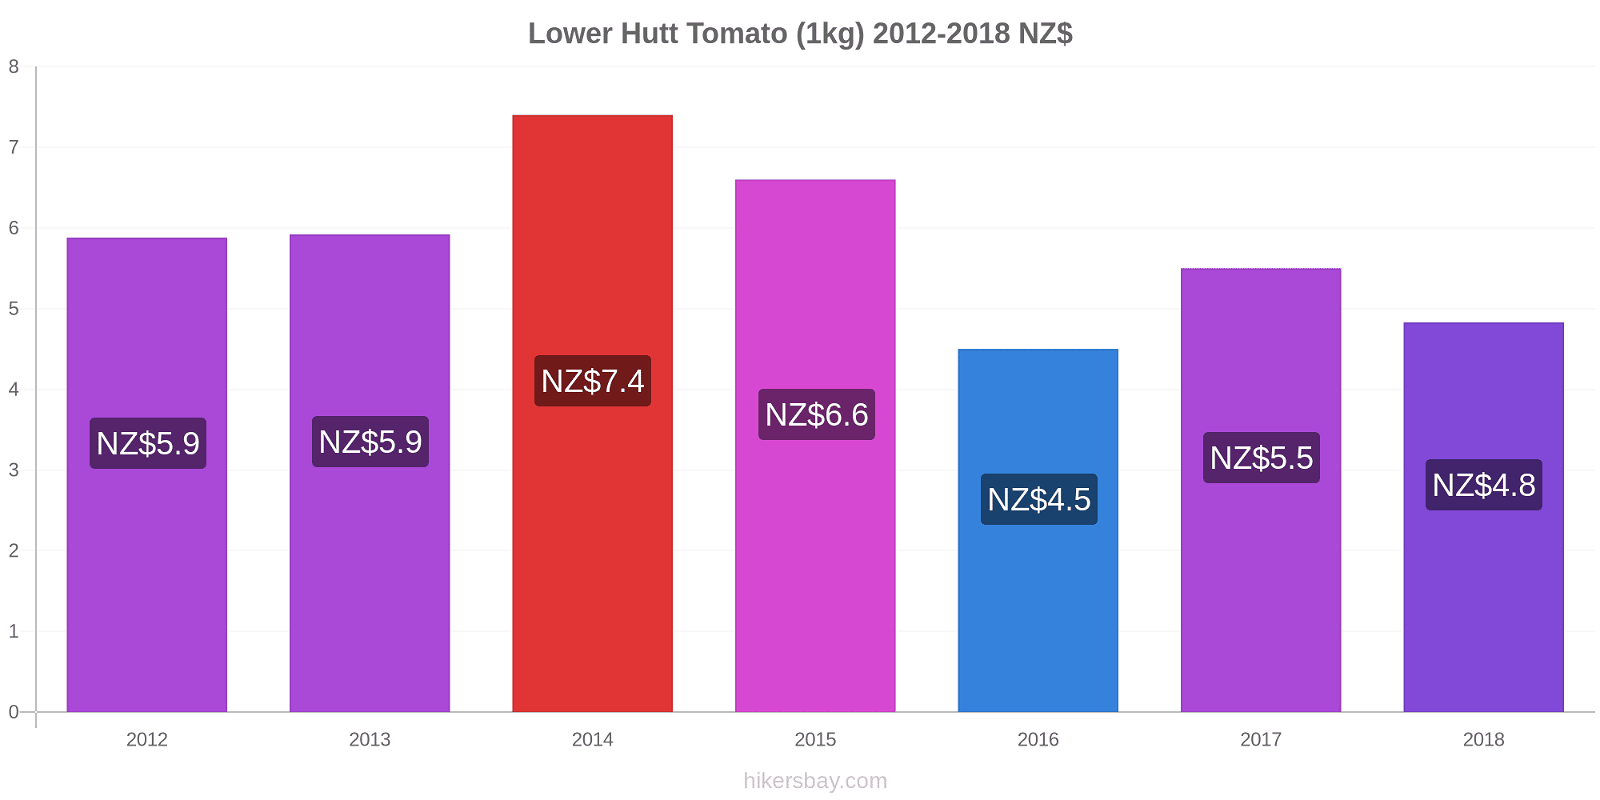 Lower Hutt price changes Tomato (1kg) hikersbay.com